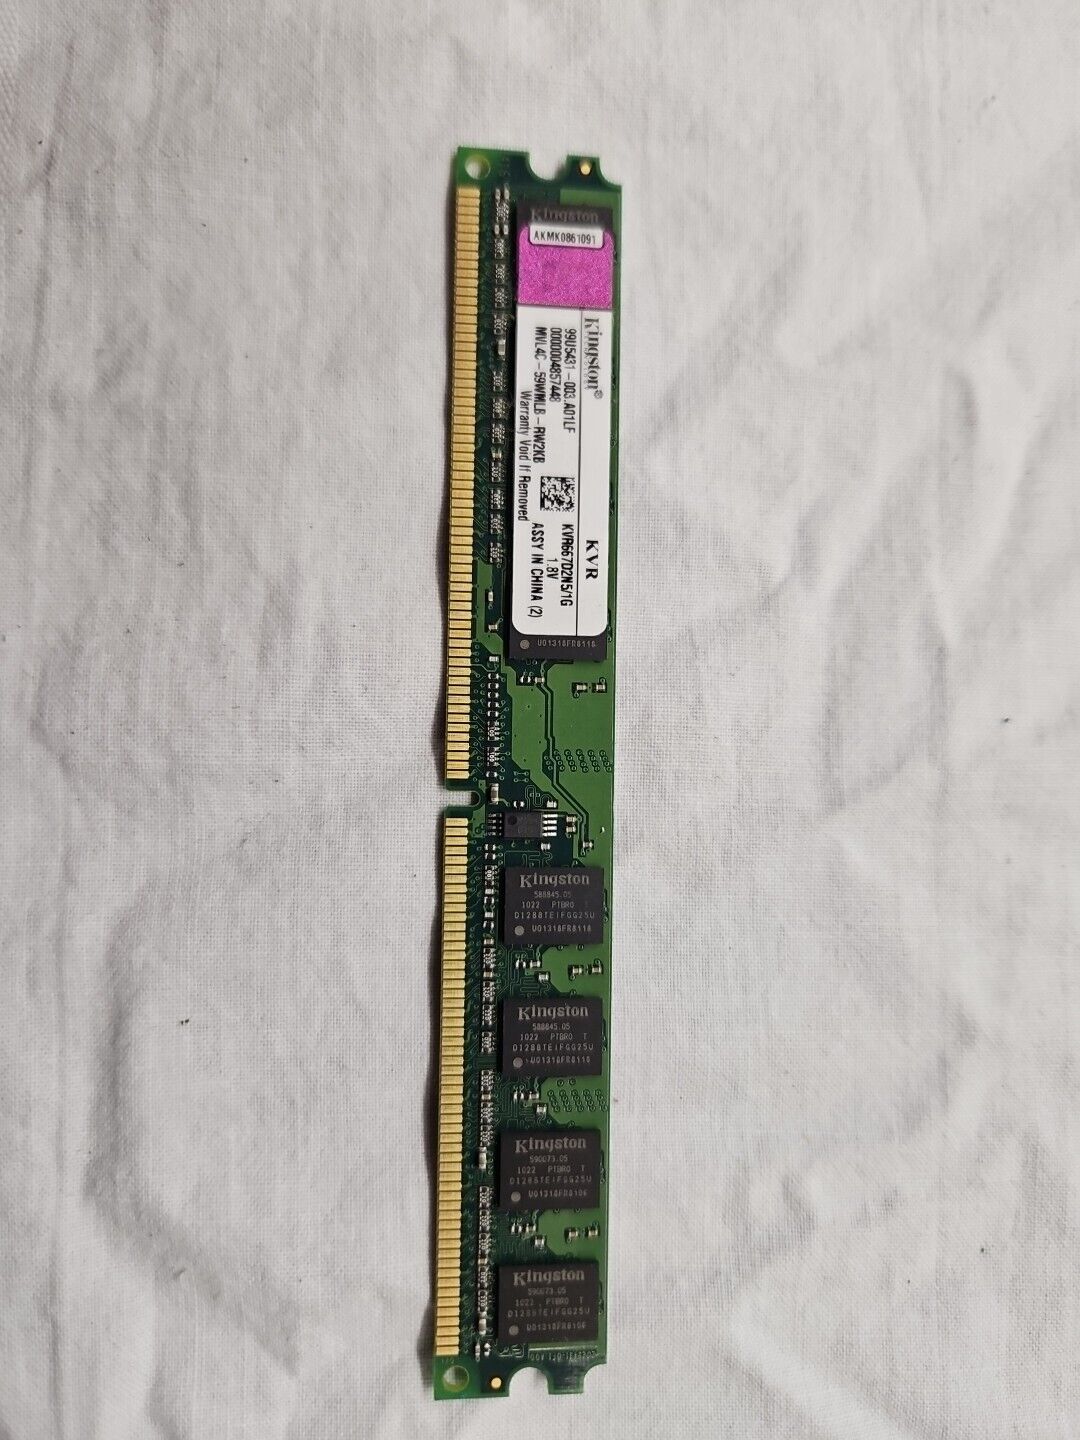 Kingston PC2-5300 (DDR2-667) 1 GB DIMM 667 MHz DDR2 SDRAM Memory Low Profile